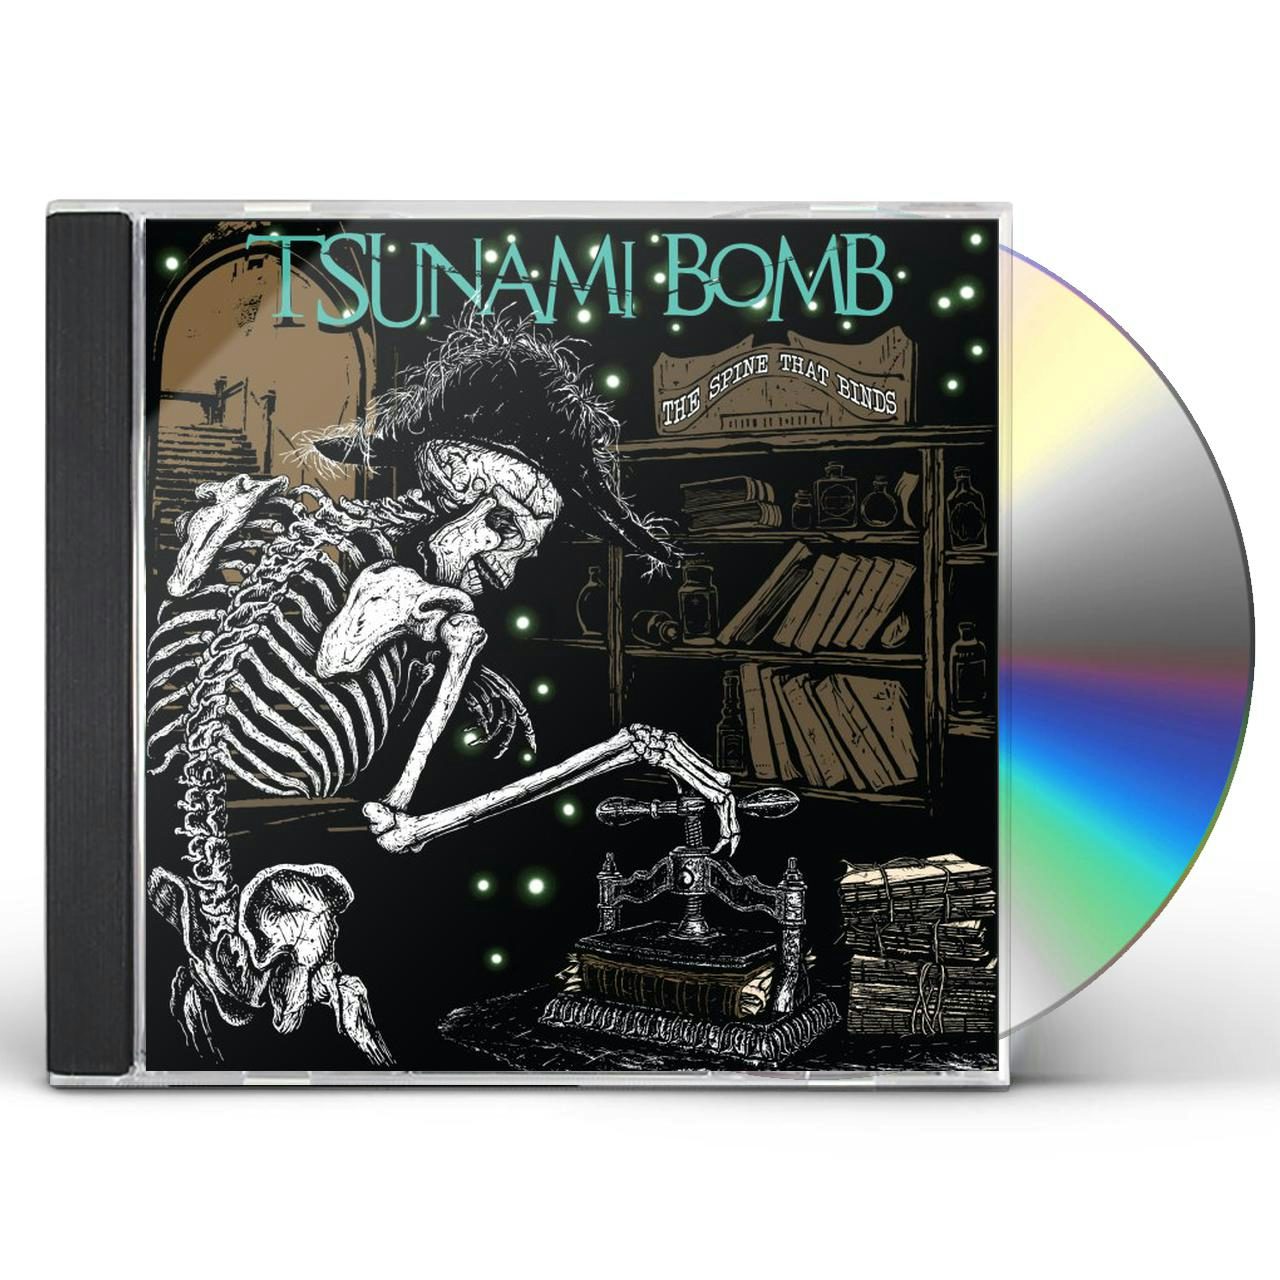 Tsunami Bomb SPINE THAT BINDS CD